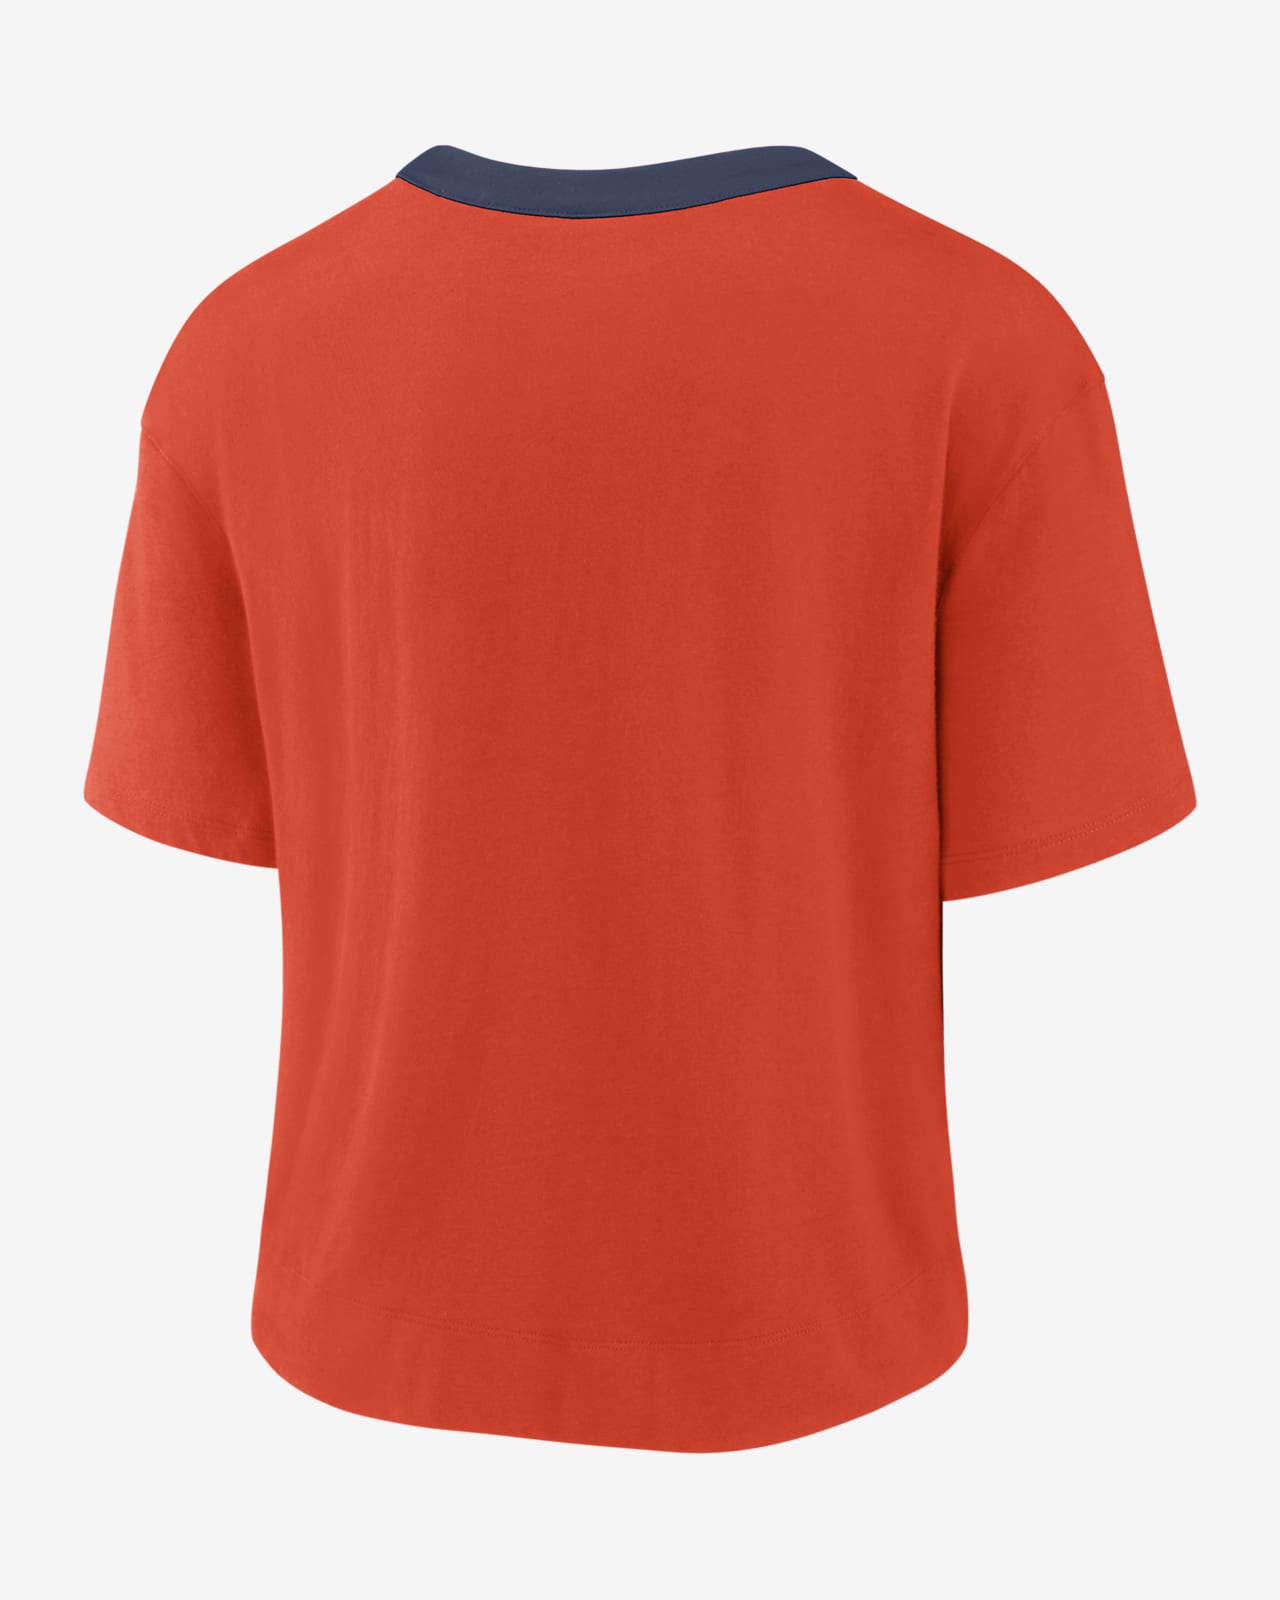 Nike Team First (MLB Houston Astros) Women's Cropped T-Shirt.